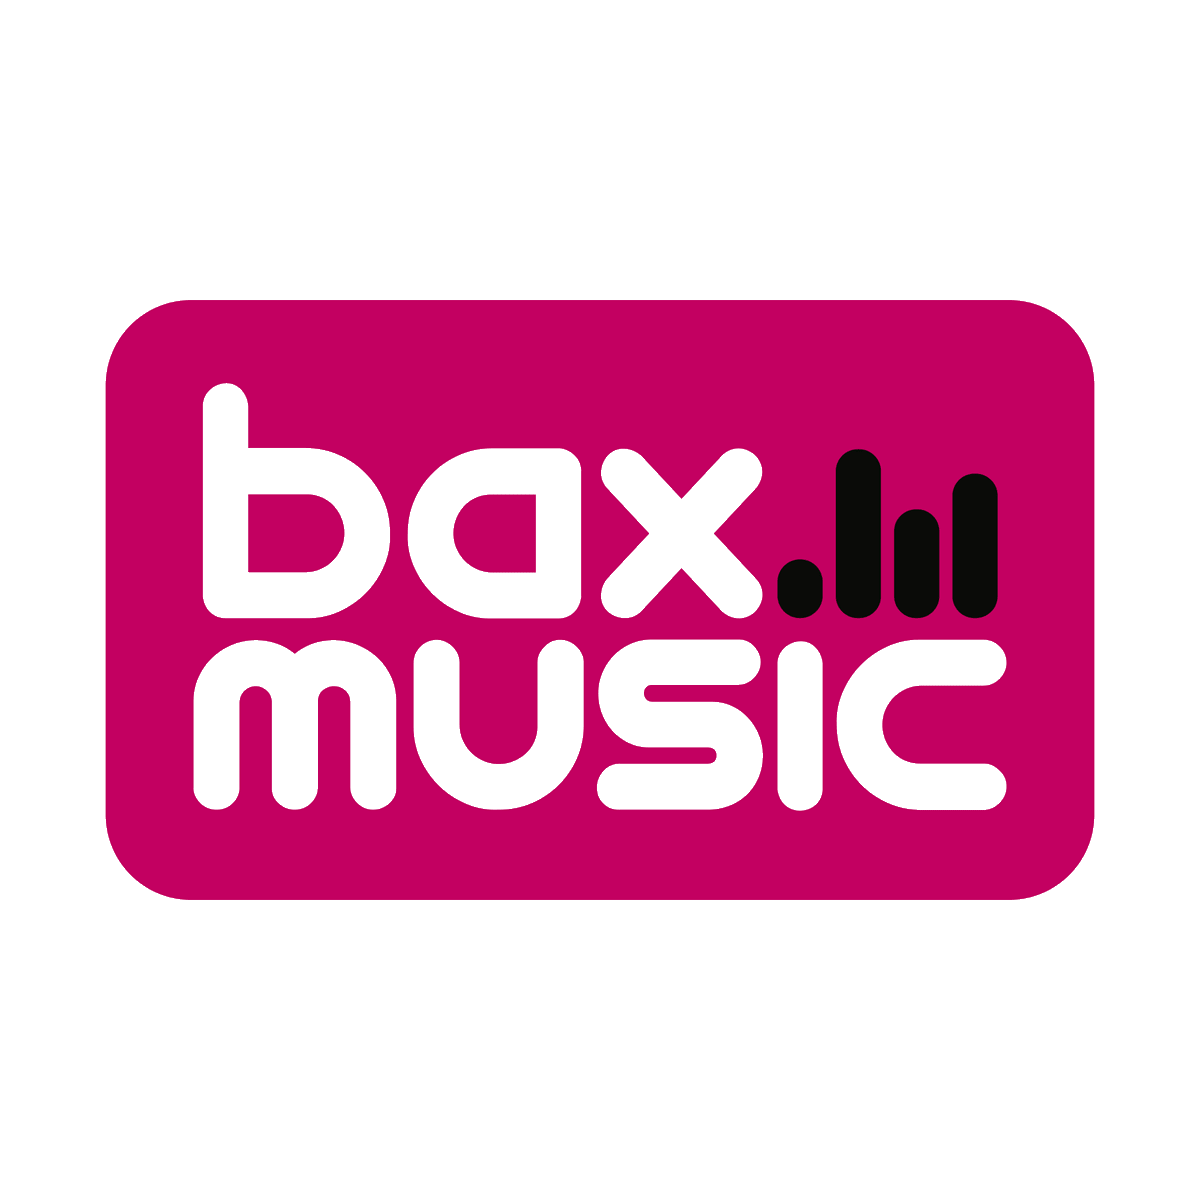 Bax music